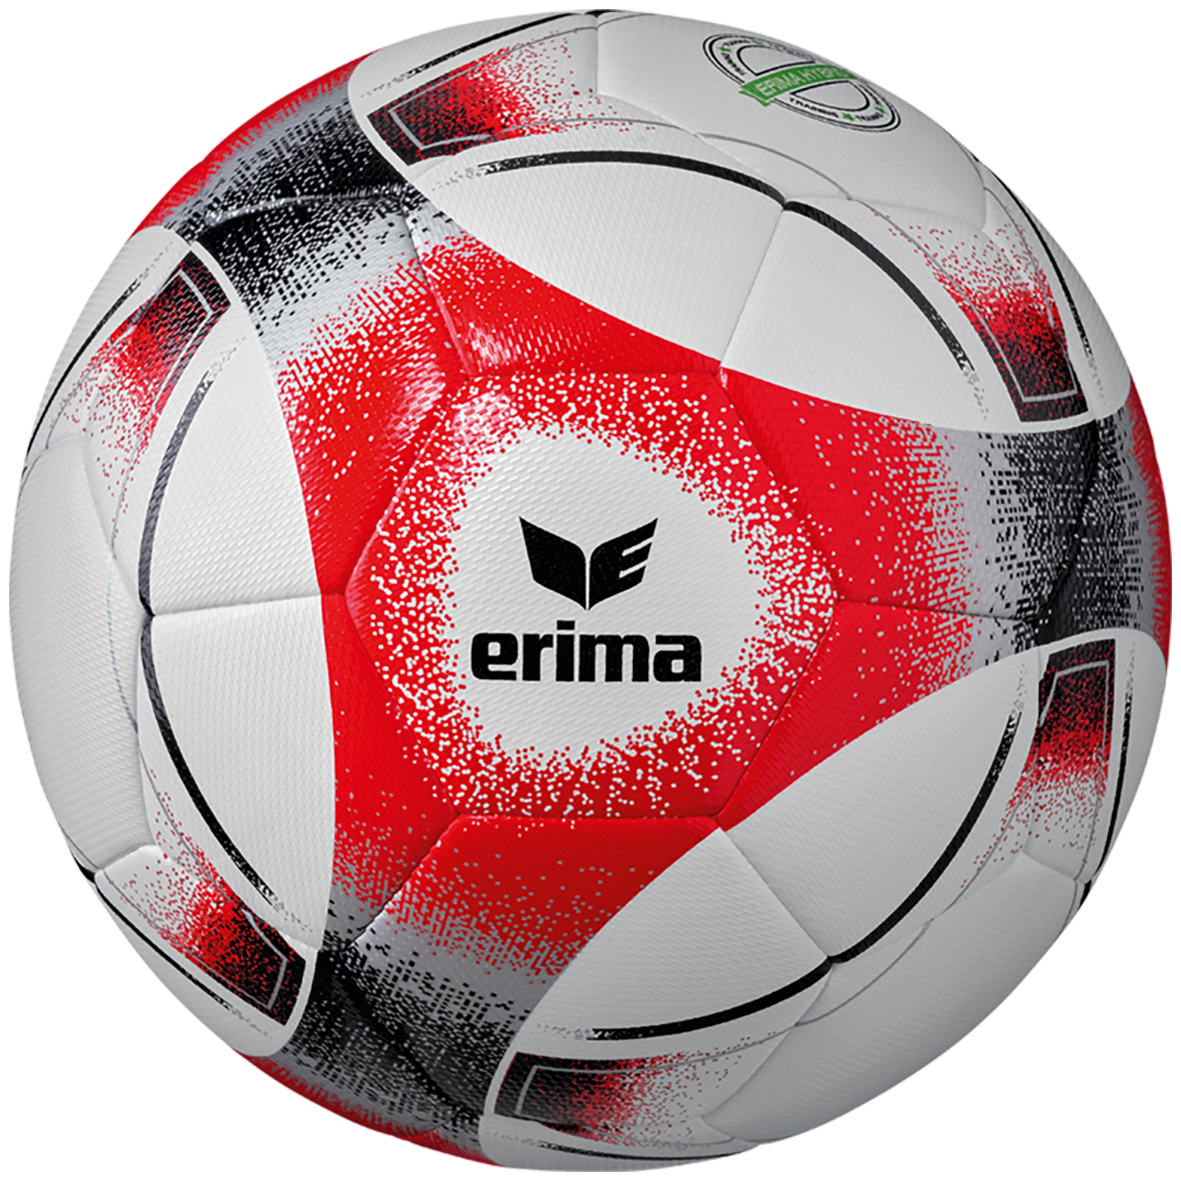 ERIMA HYBRID TRAINING 2.0 FOOTBALL BALL, RED-BLACK SIZE 5.